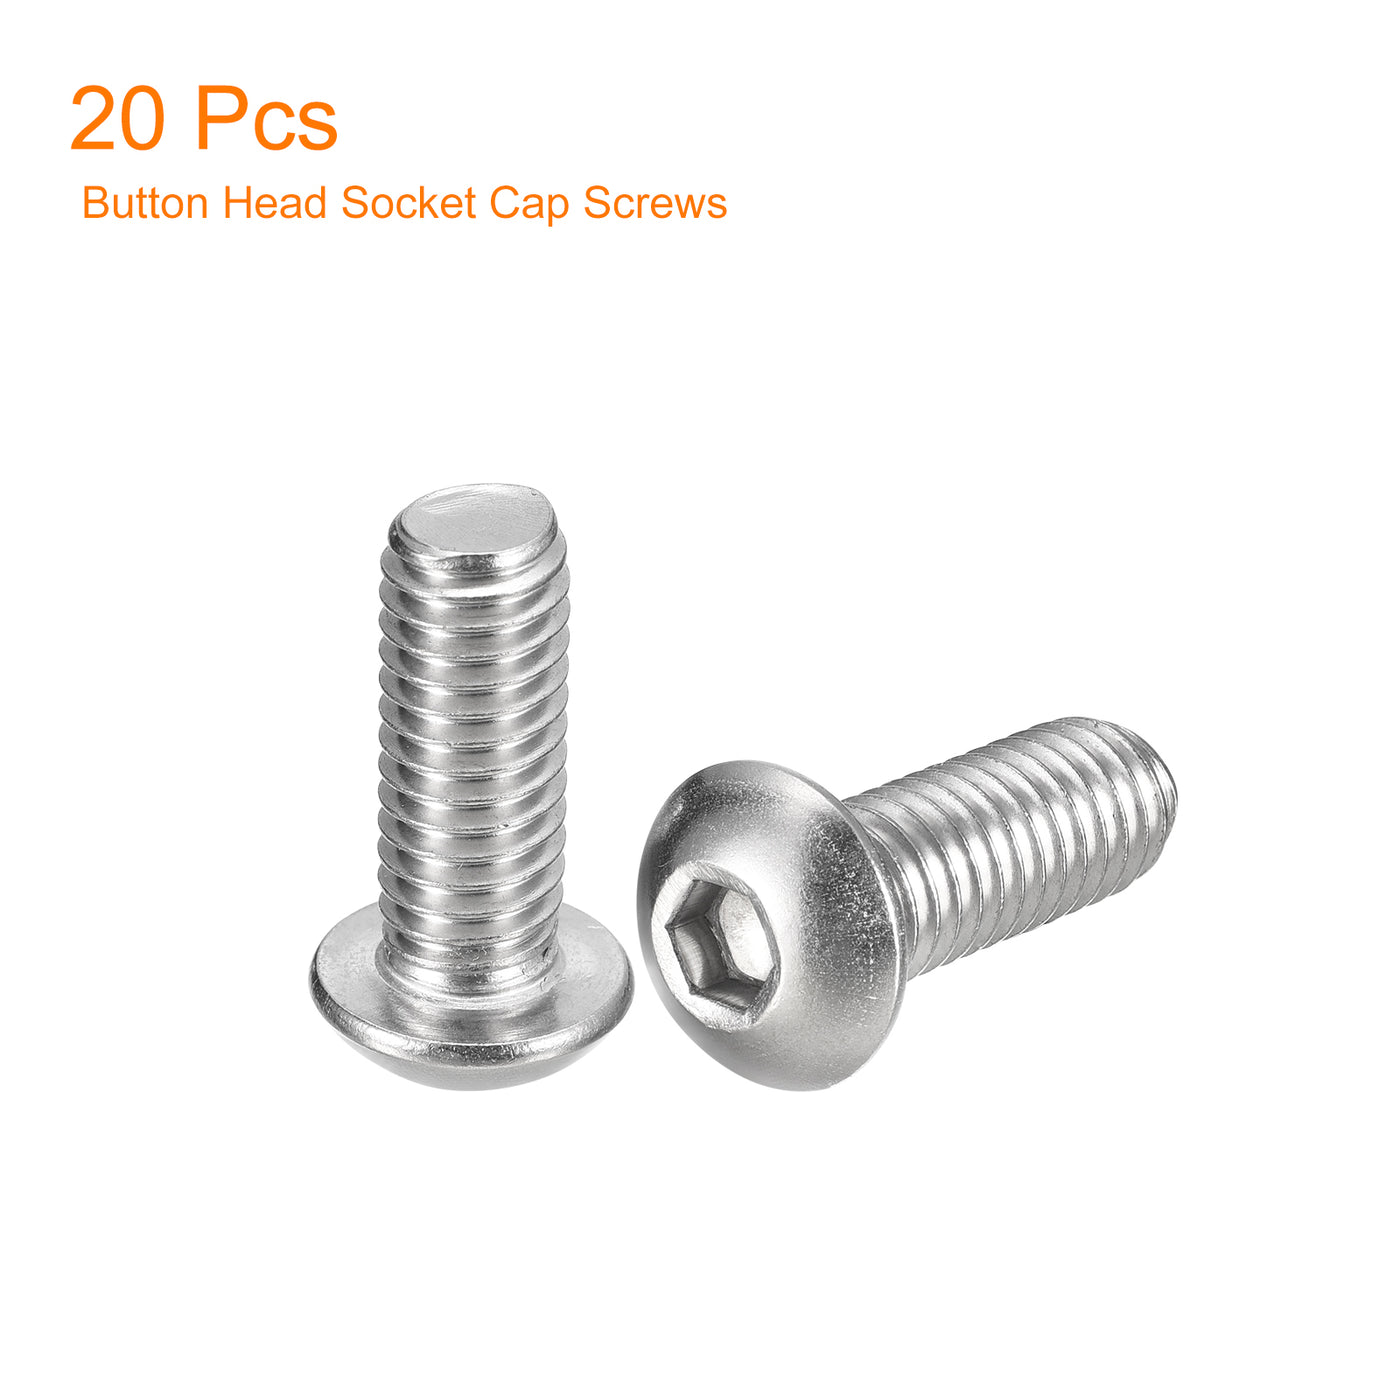 uxcell Uxcell 3/8-16x1" Button Head Socket Cap Screws, 20pcs 304 Stainless Steel Screws